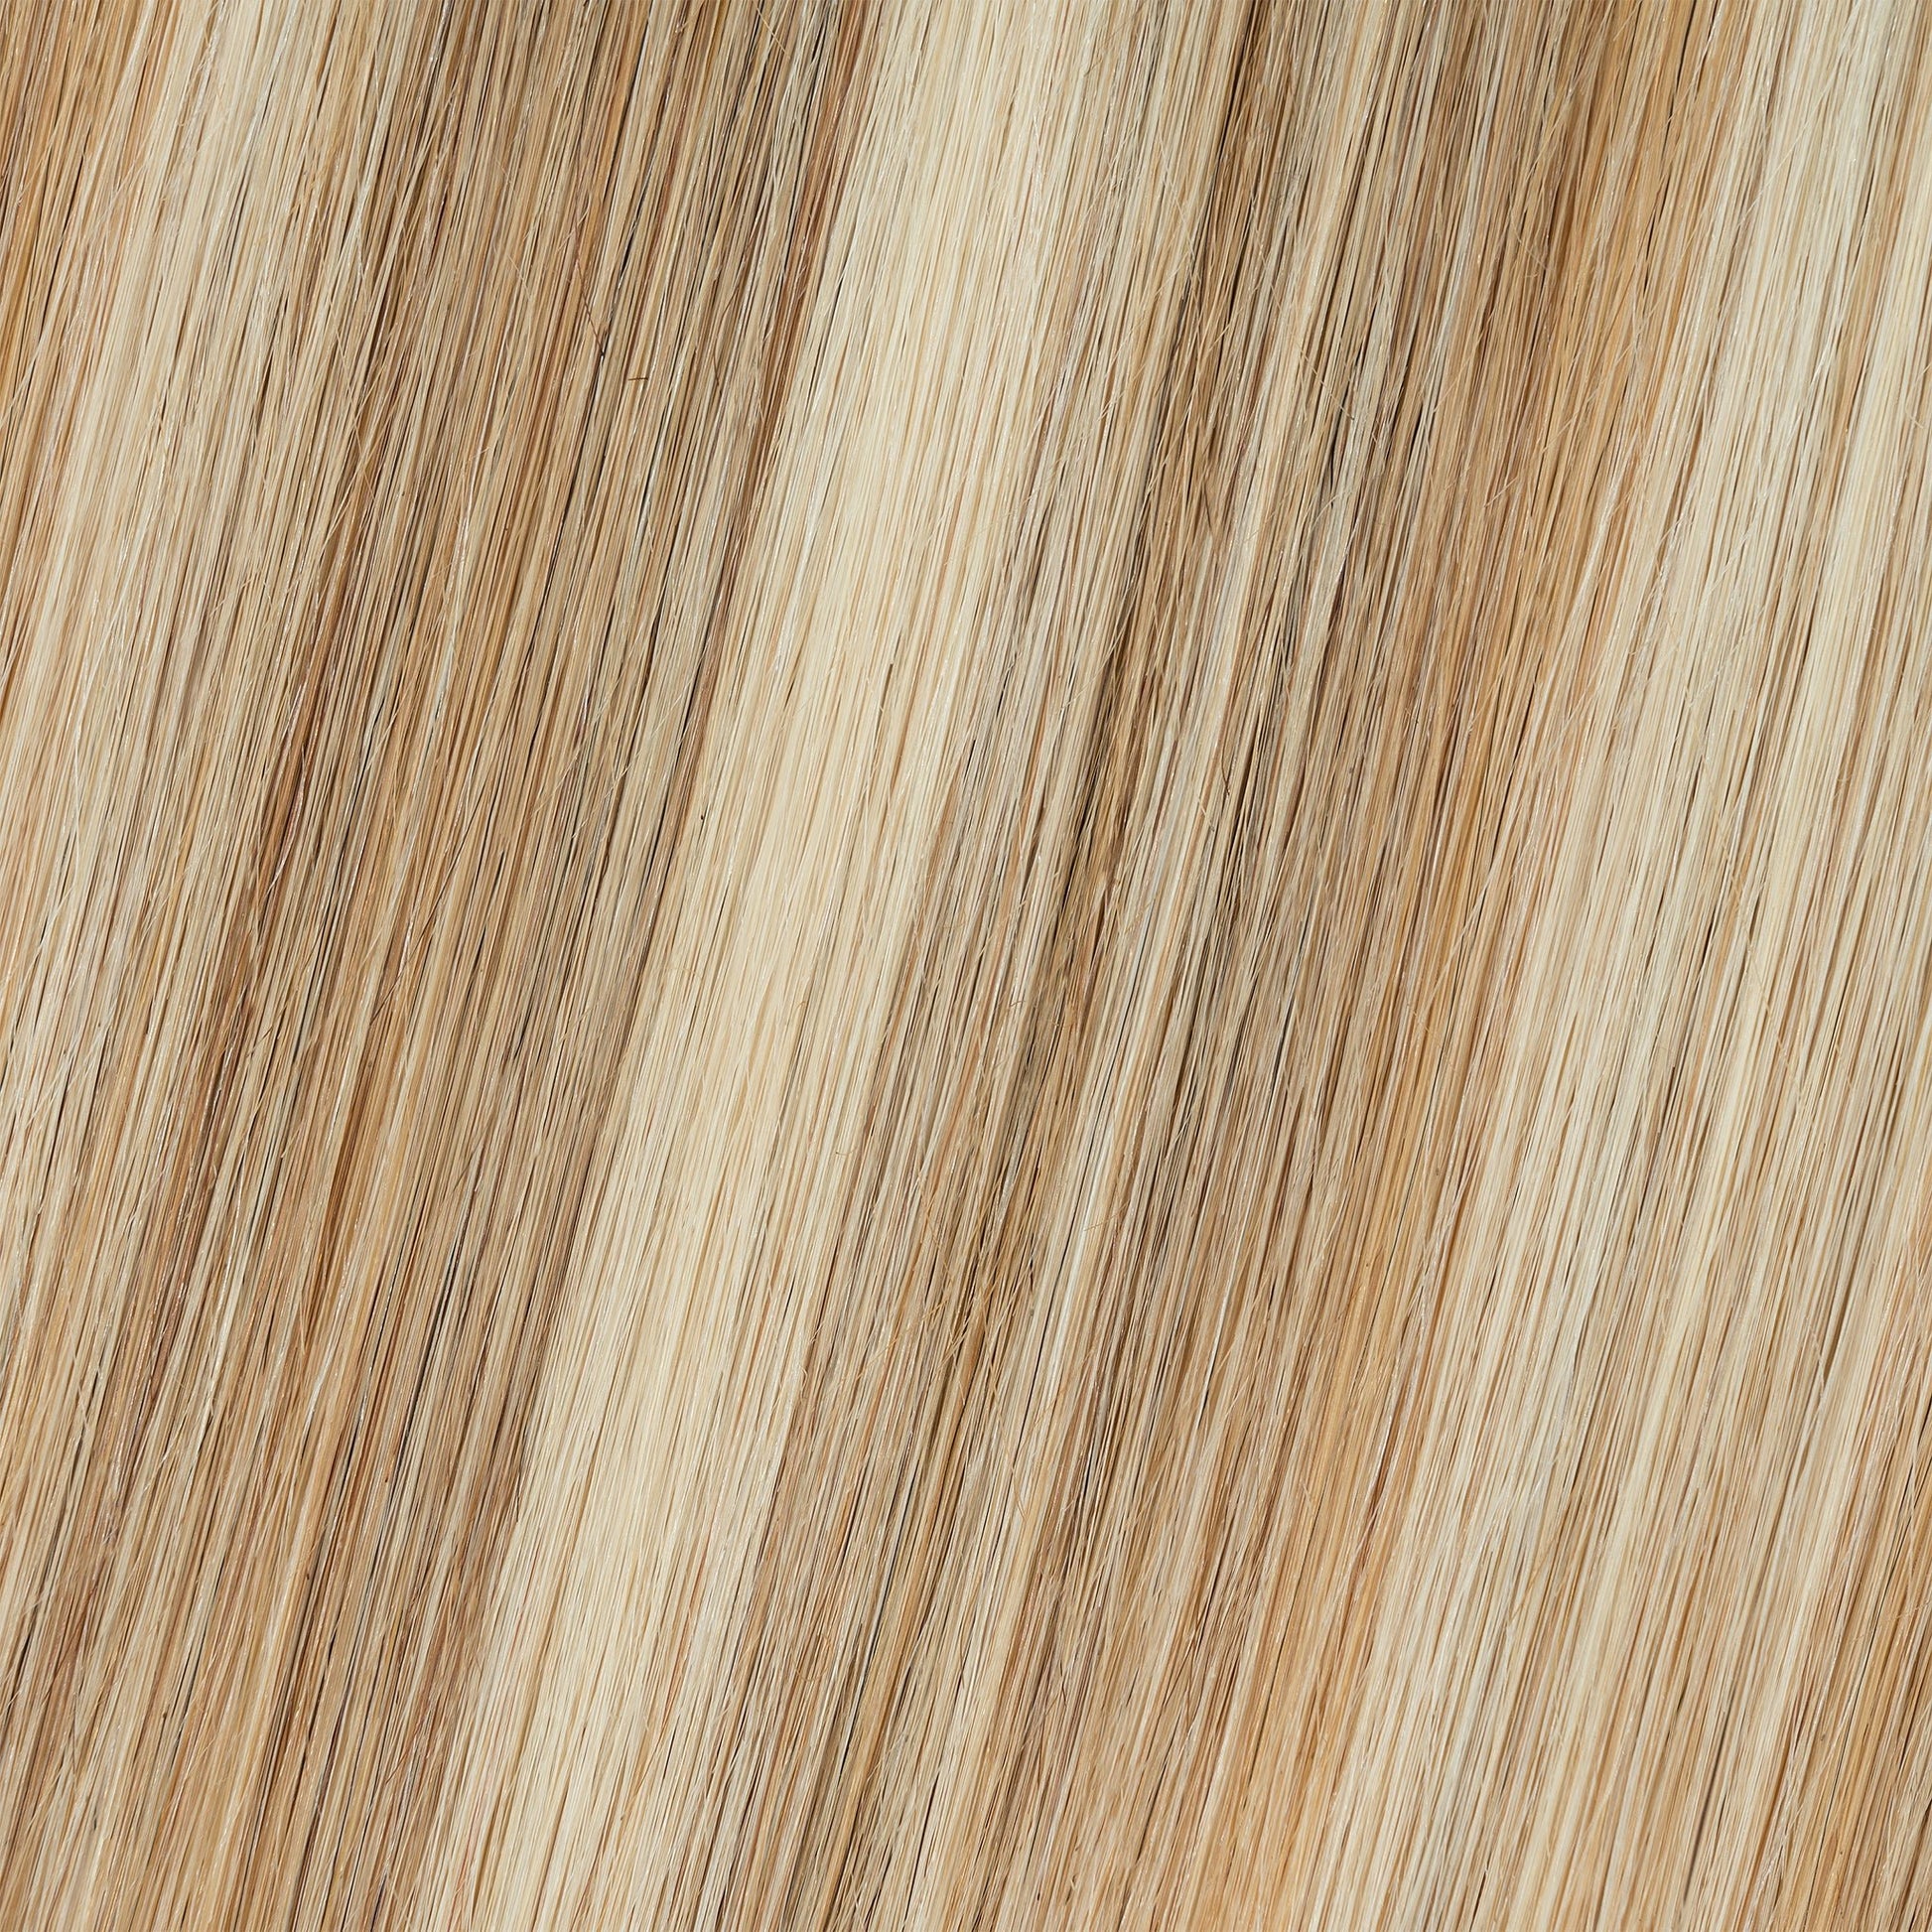 Golden Brown Blonde Highlighted Thinning Hair Fill-Ins segohair.com